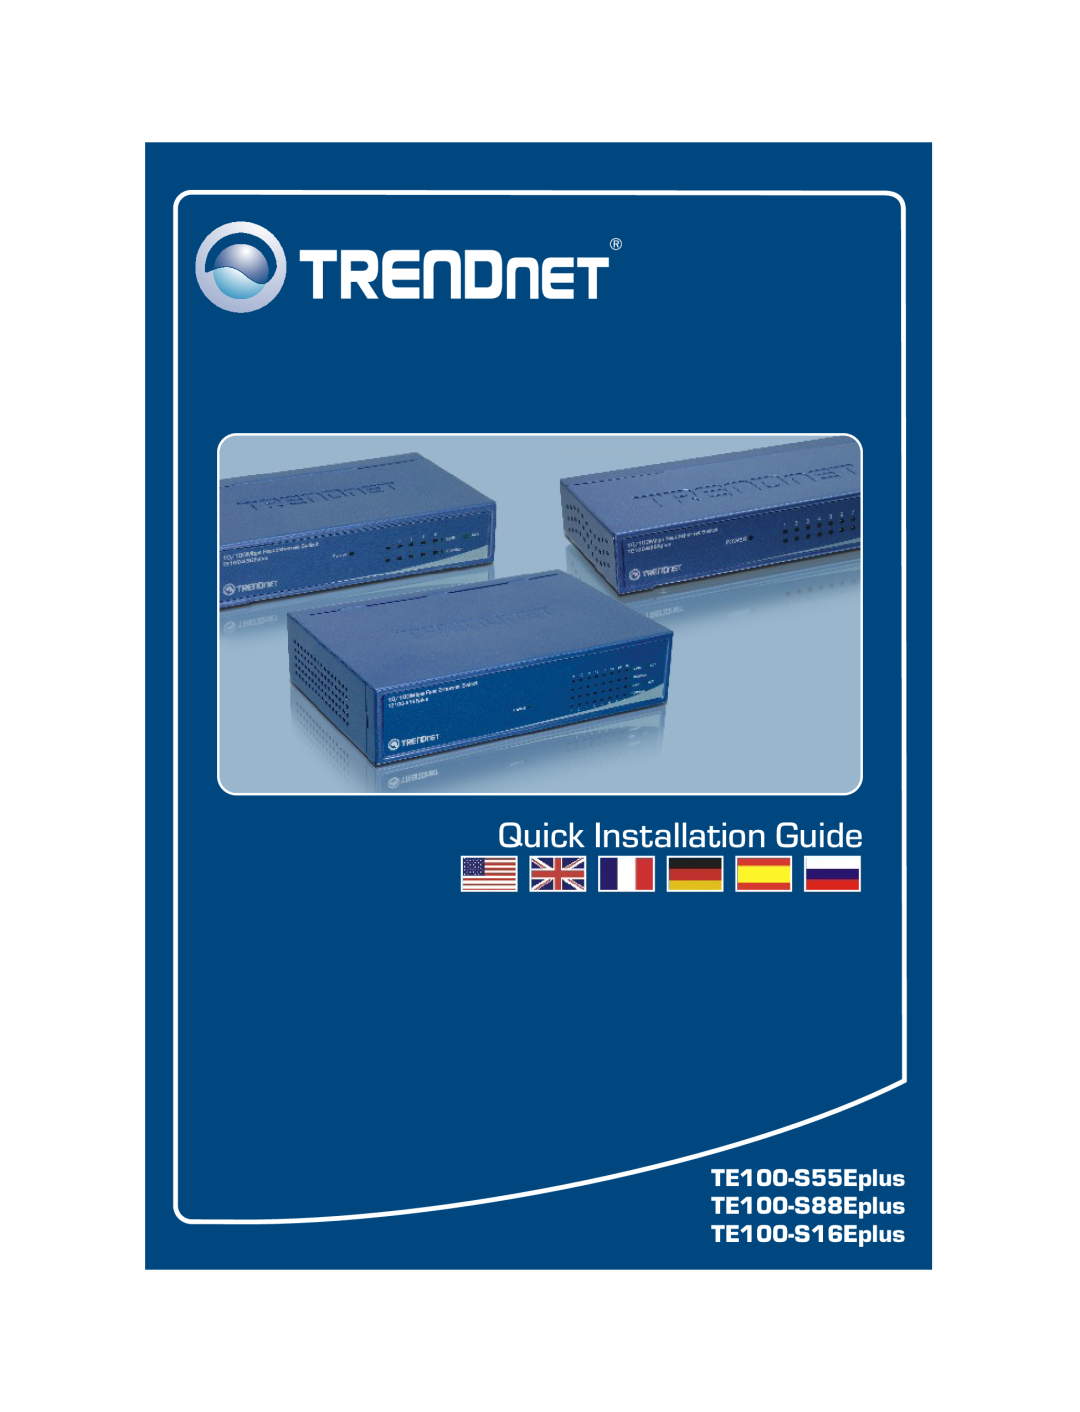 TRENDnet manual Quick Installation Guide, TE100-S55Eplus TE100-S88Eplus TE100-S16Eplus 